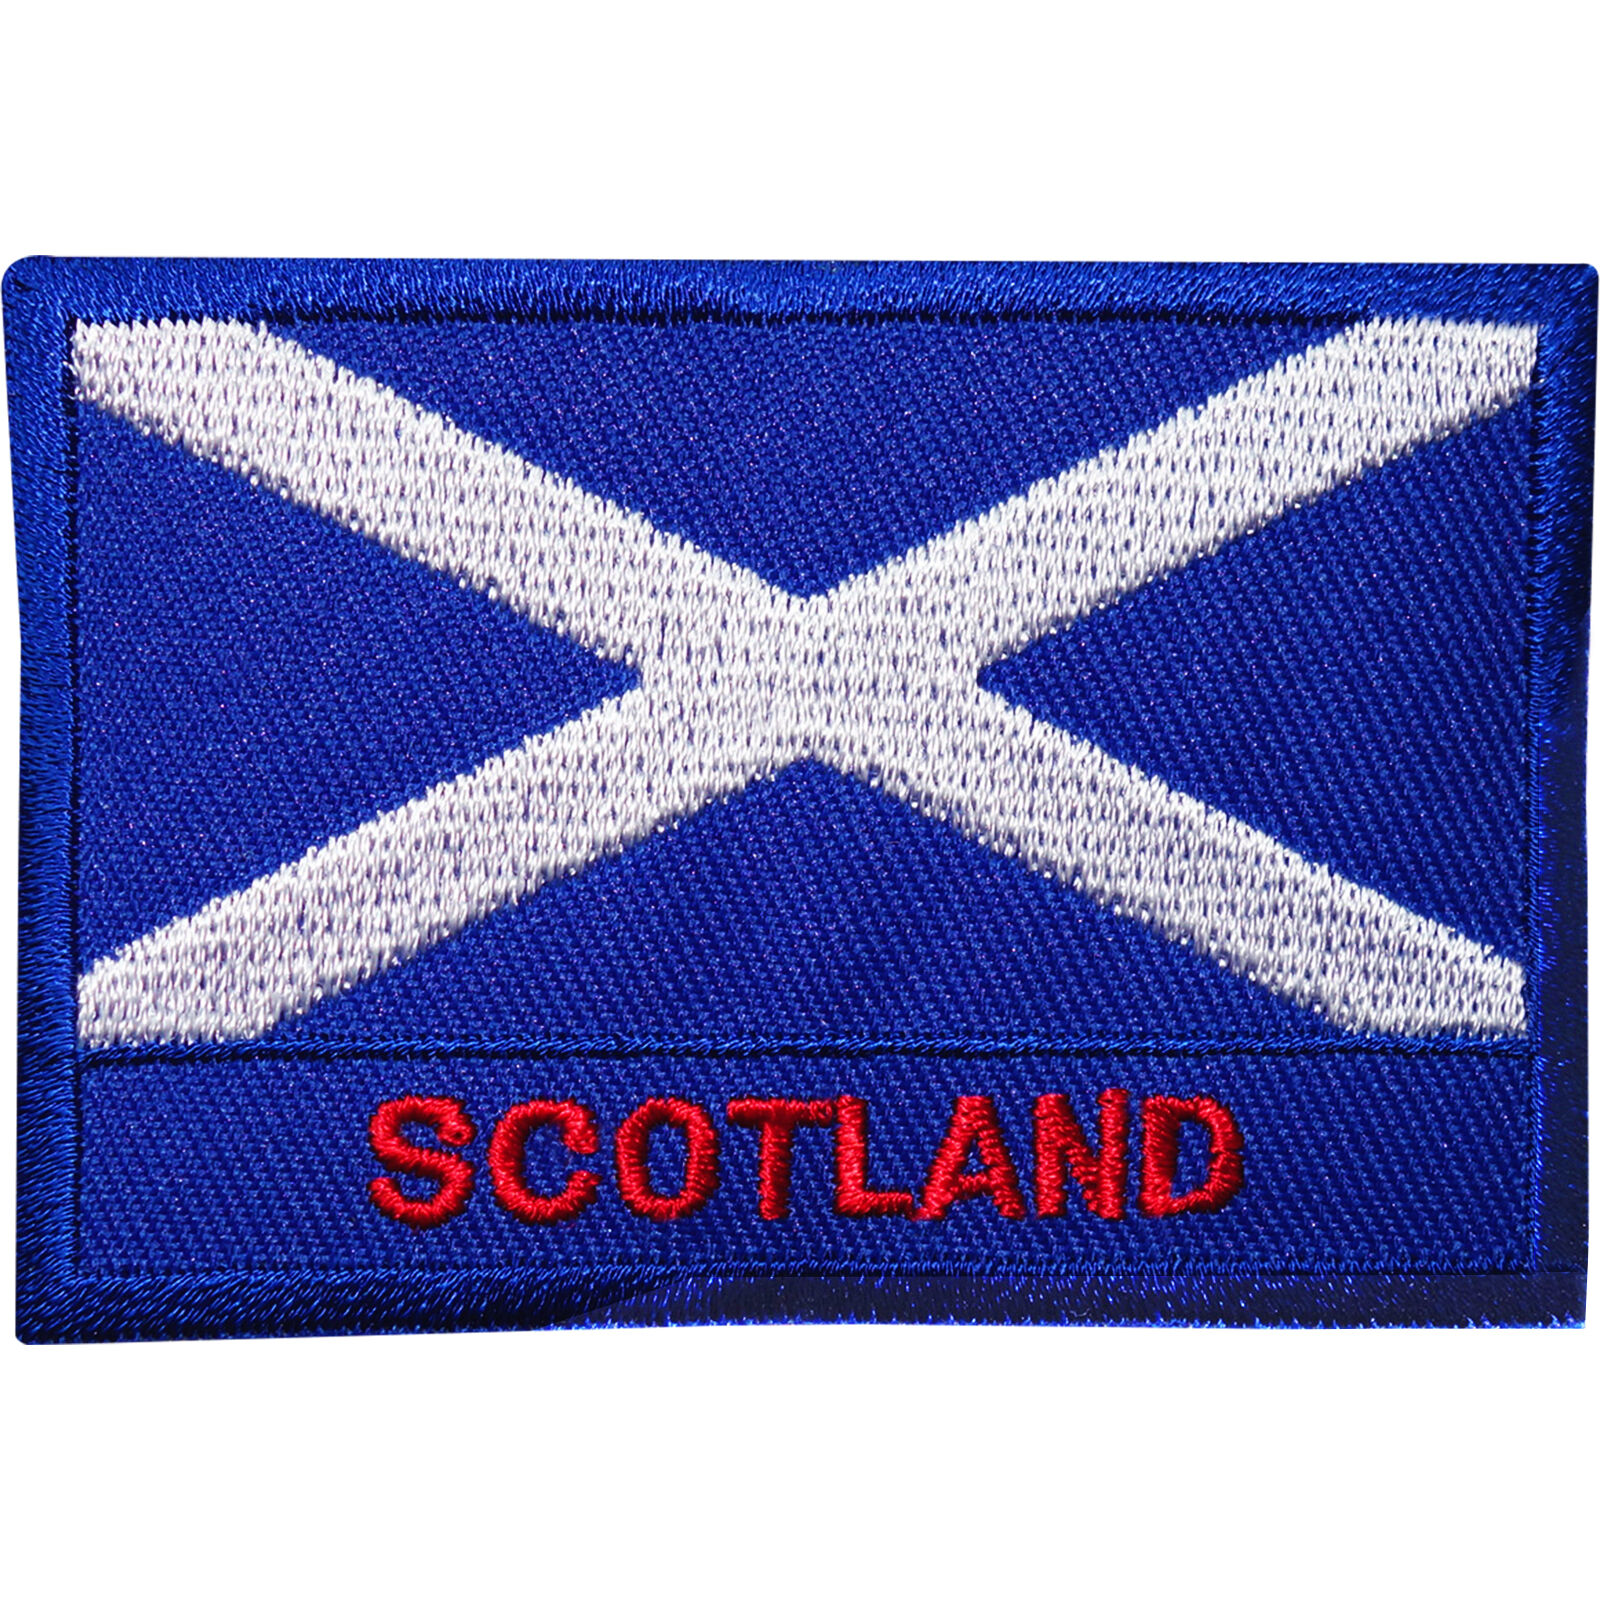 Scotland Flag Embroidered Iron Sew On Patch Scottish T Shirt Kilt Coat Bag Badge